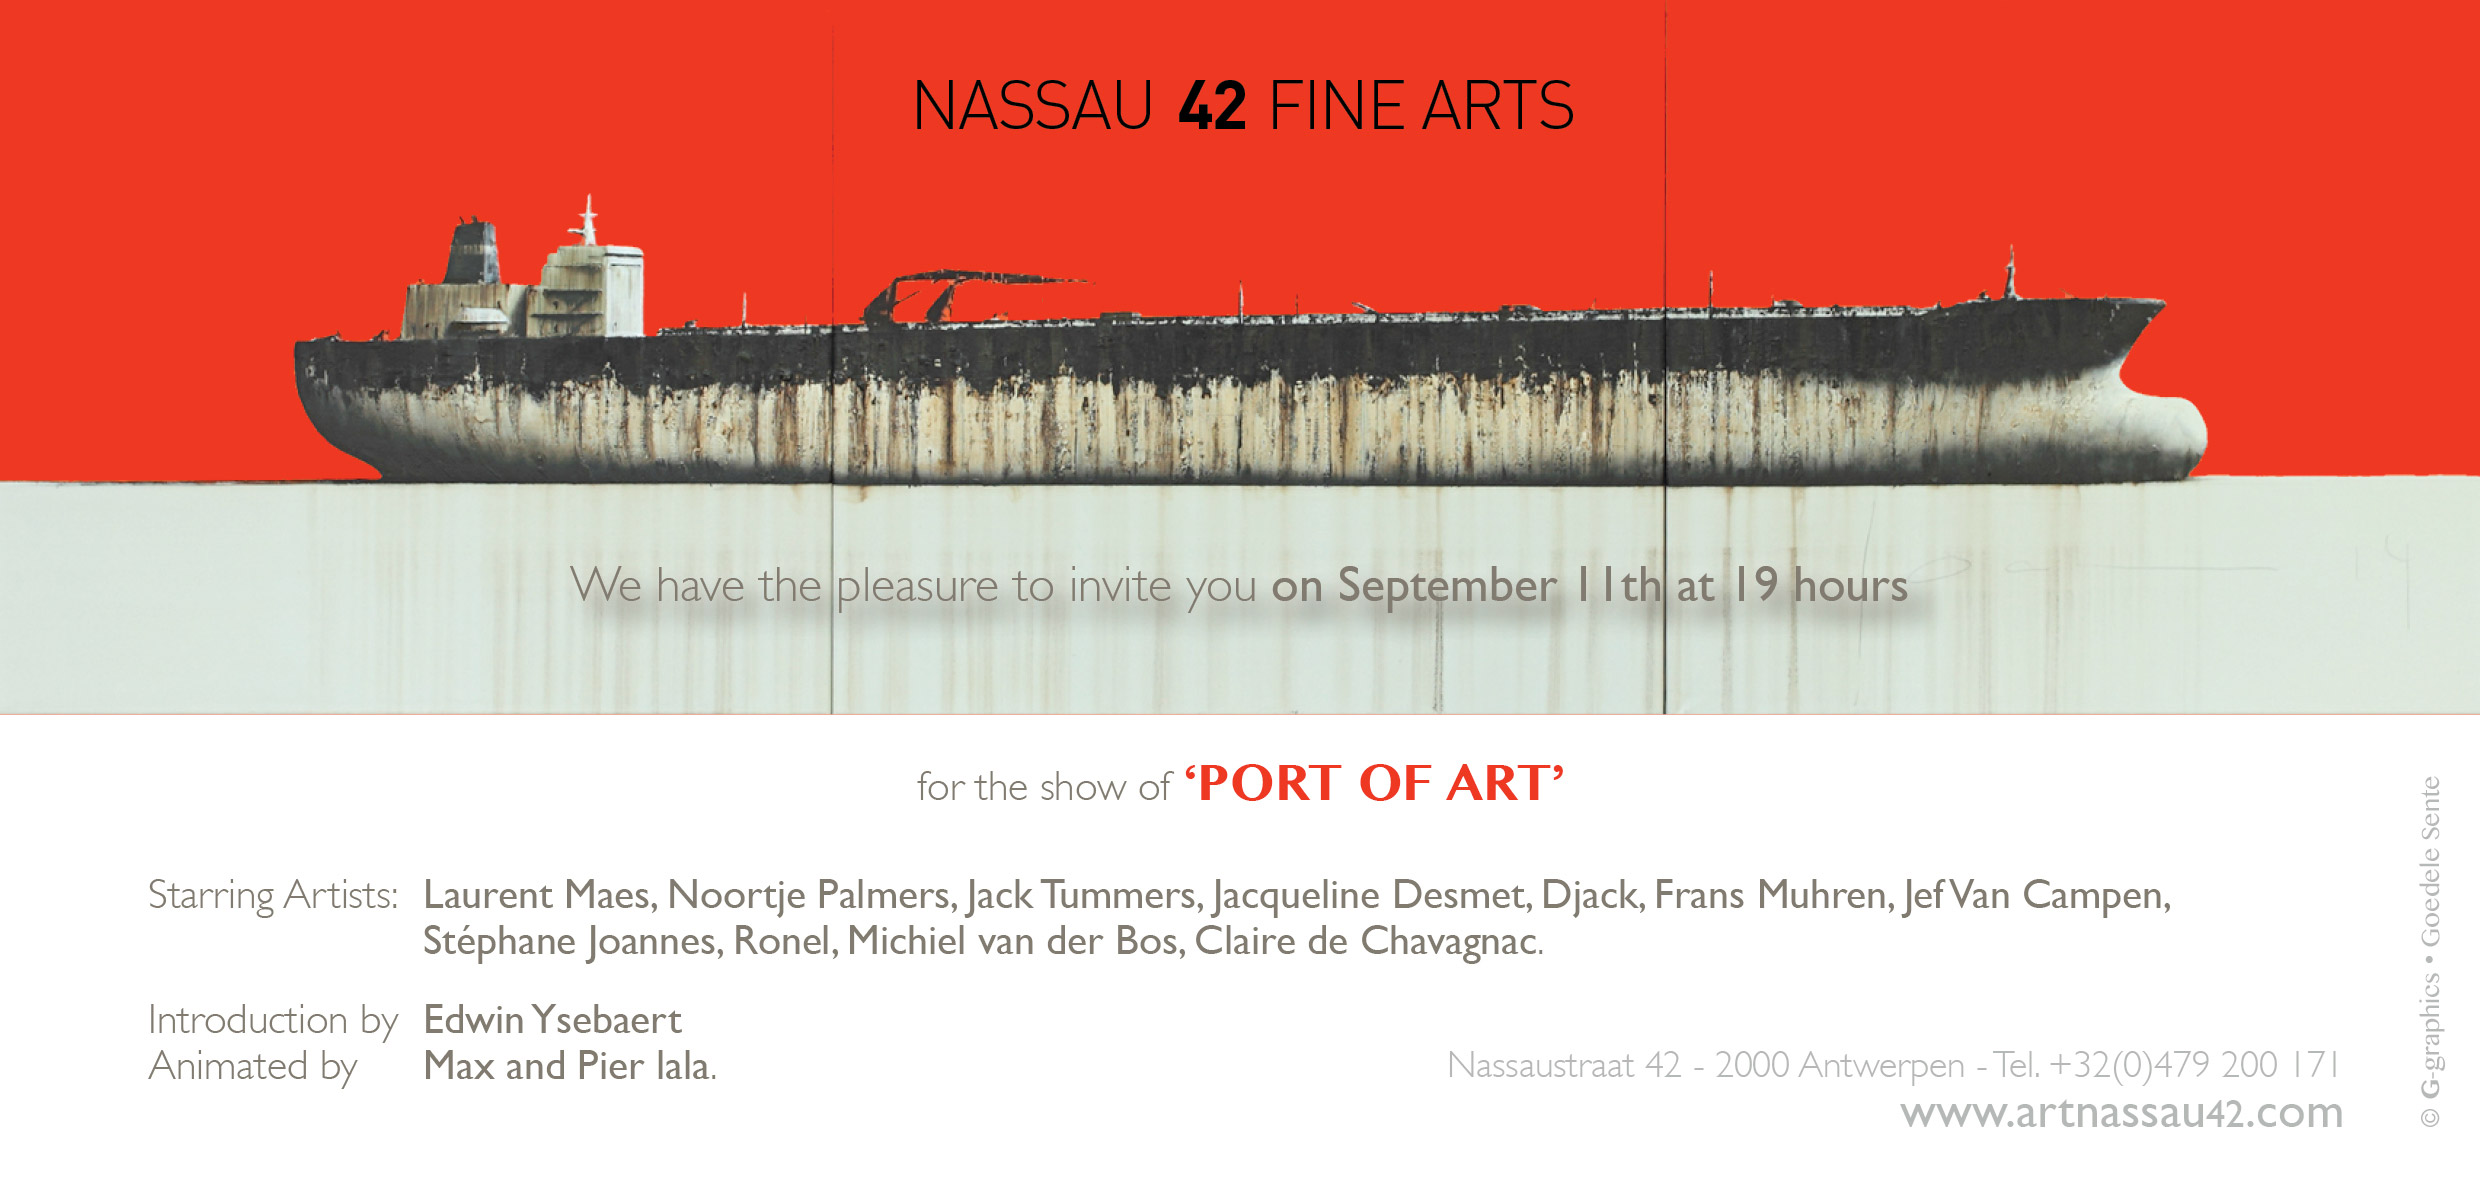 Nassau-42-uitn.-Port-of-Art3-kleiner